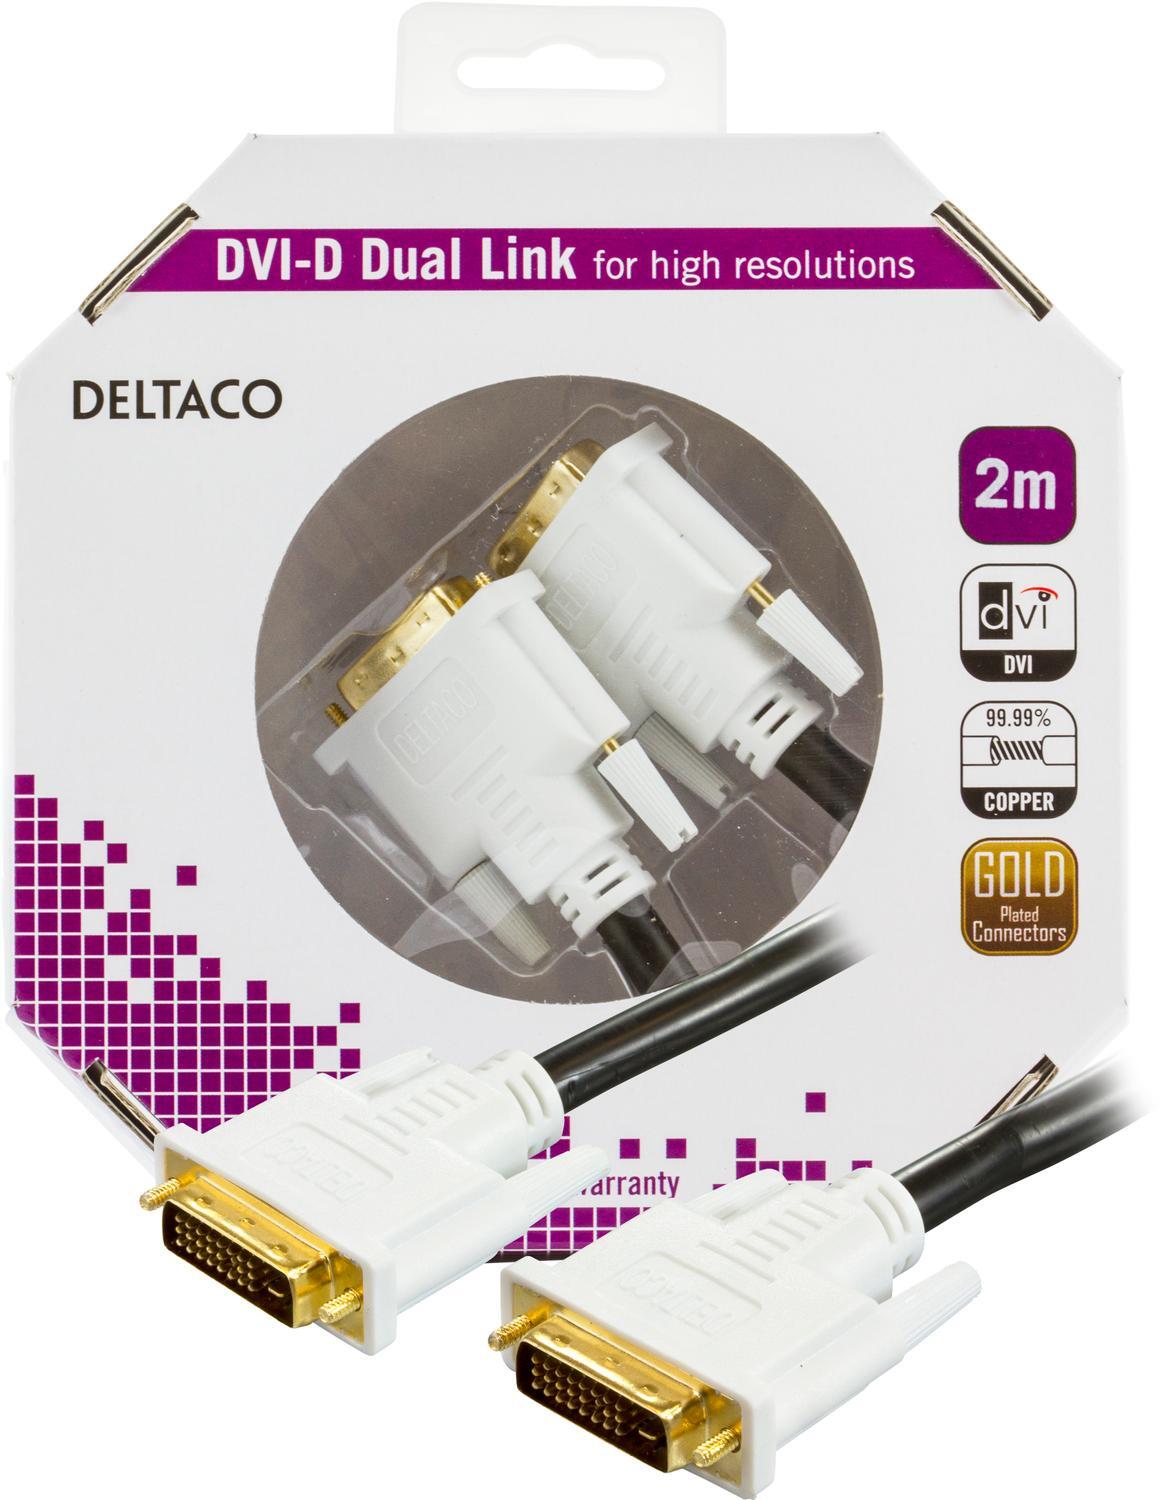 DELTACO, DVI monitorkabel Dual Link, DVI-D han - han 2m | Elgiganten